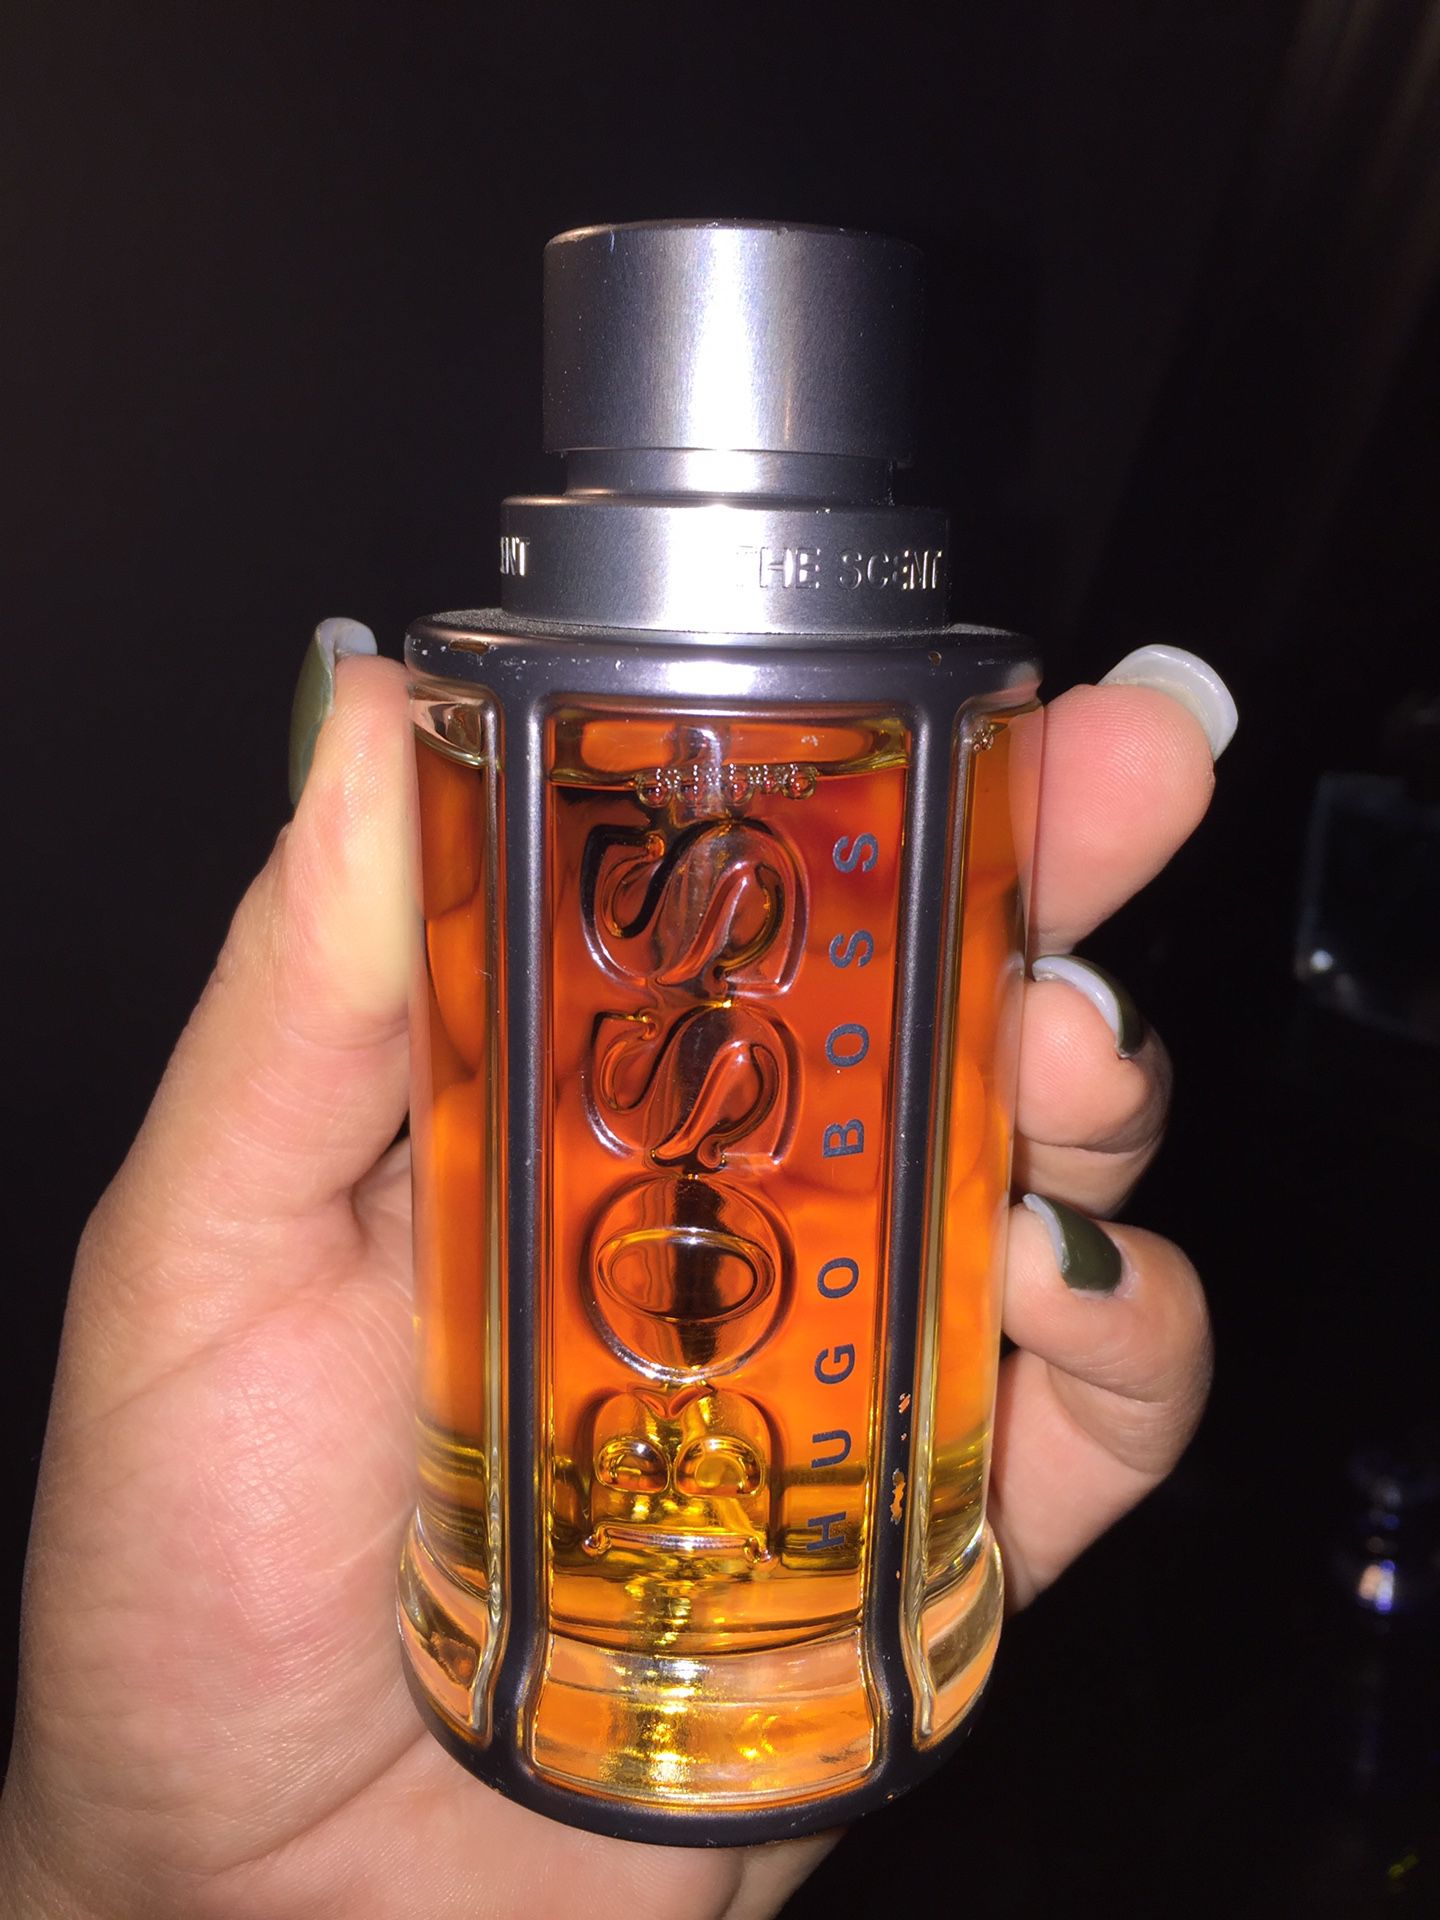 Hugo boss perfume $30